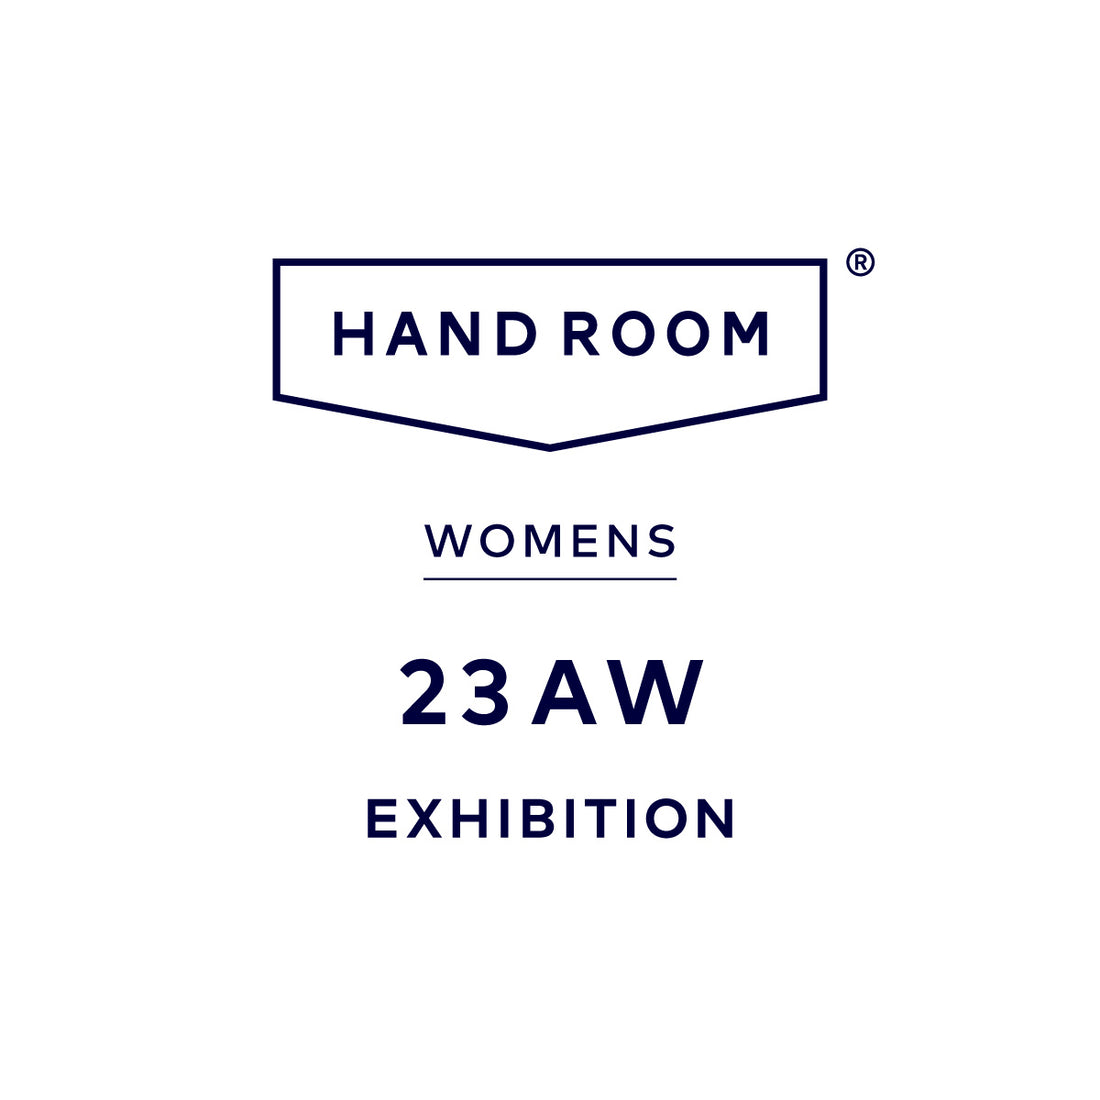 HAND ROOM WOMENS 23AWの展示会を開催します。